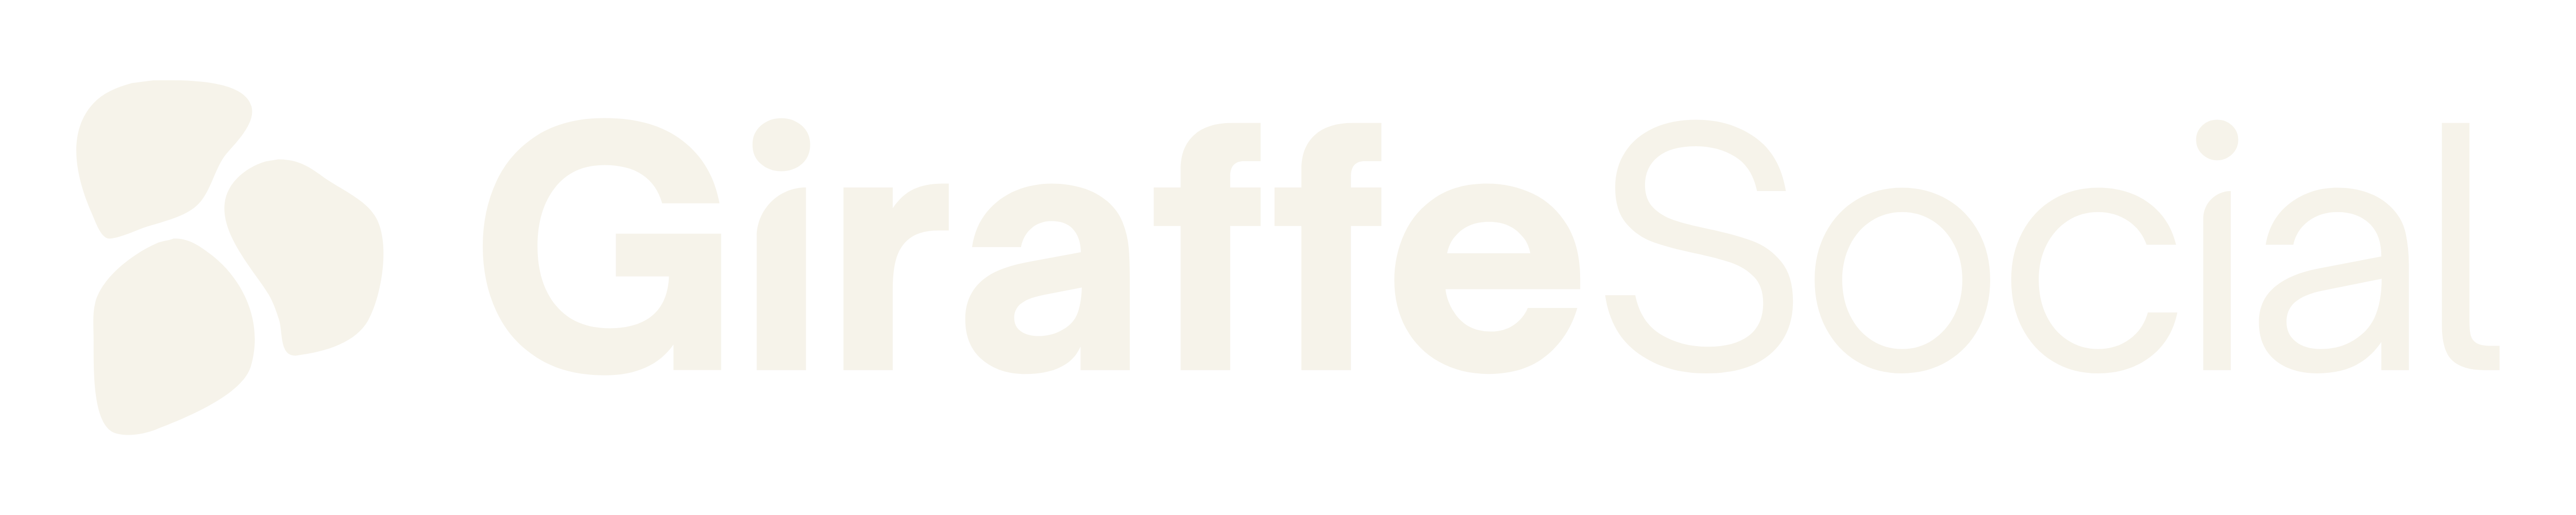 giraffe social logo - agency